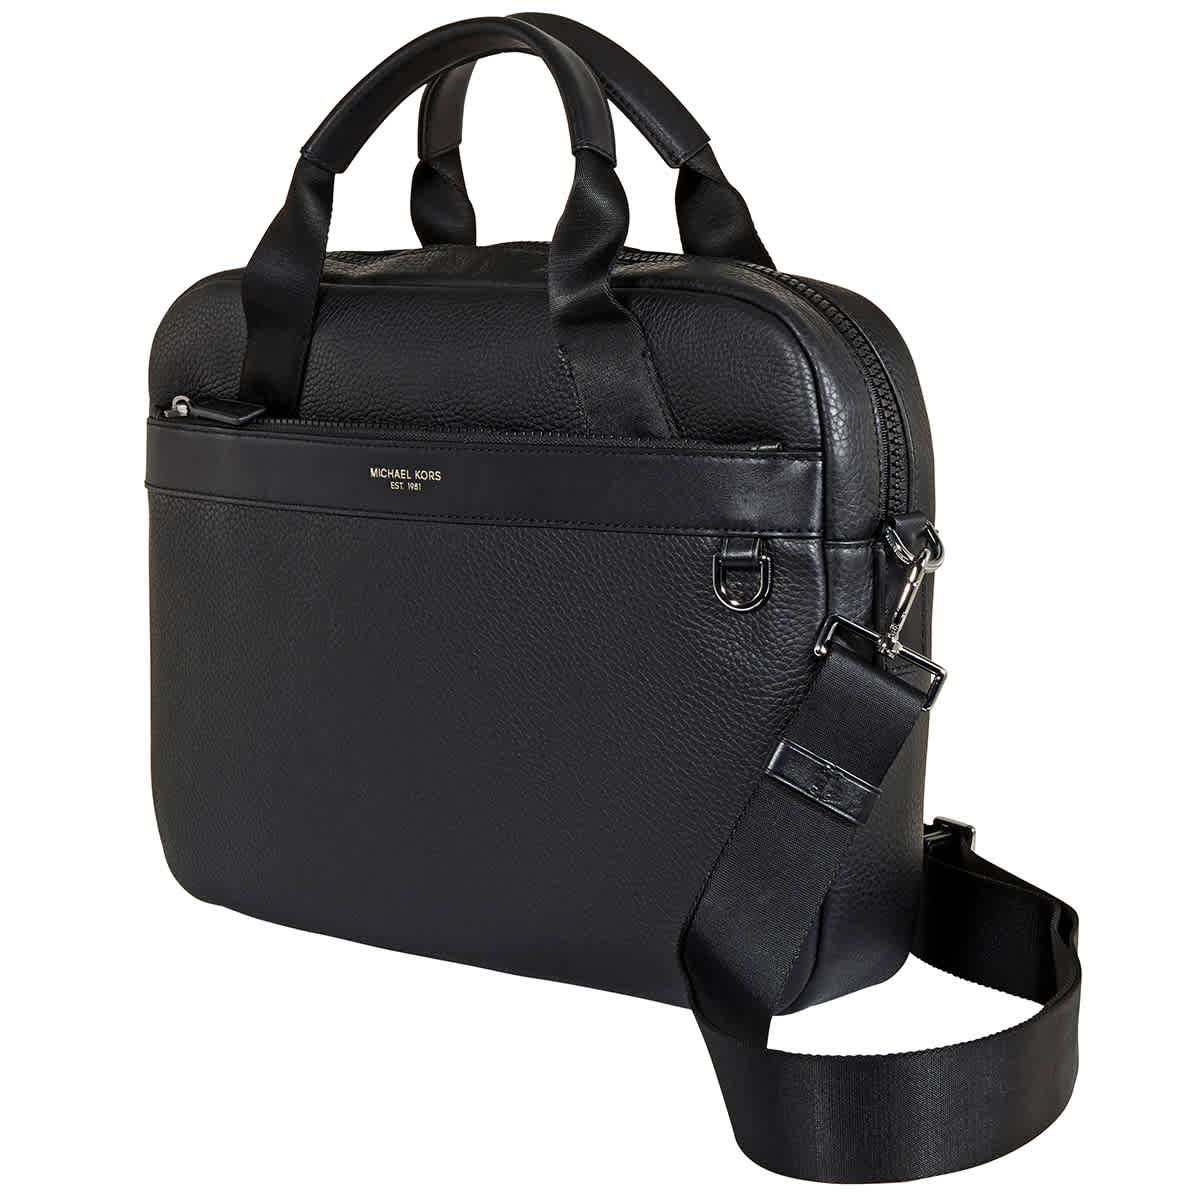 Michael Kors Greyson Slim Pebbled Leather Briefcase in Black,Grey (Black)  for Men - Lyst